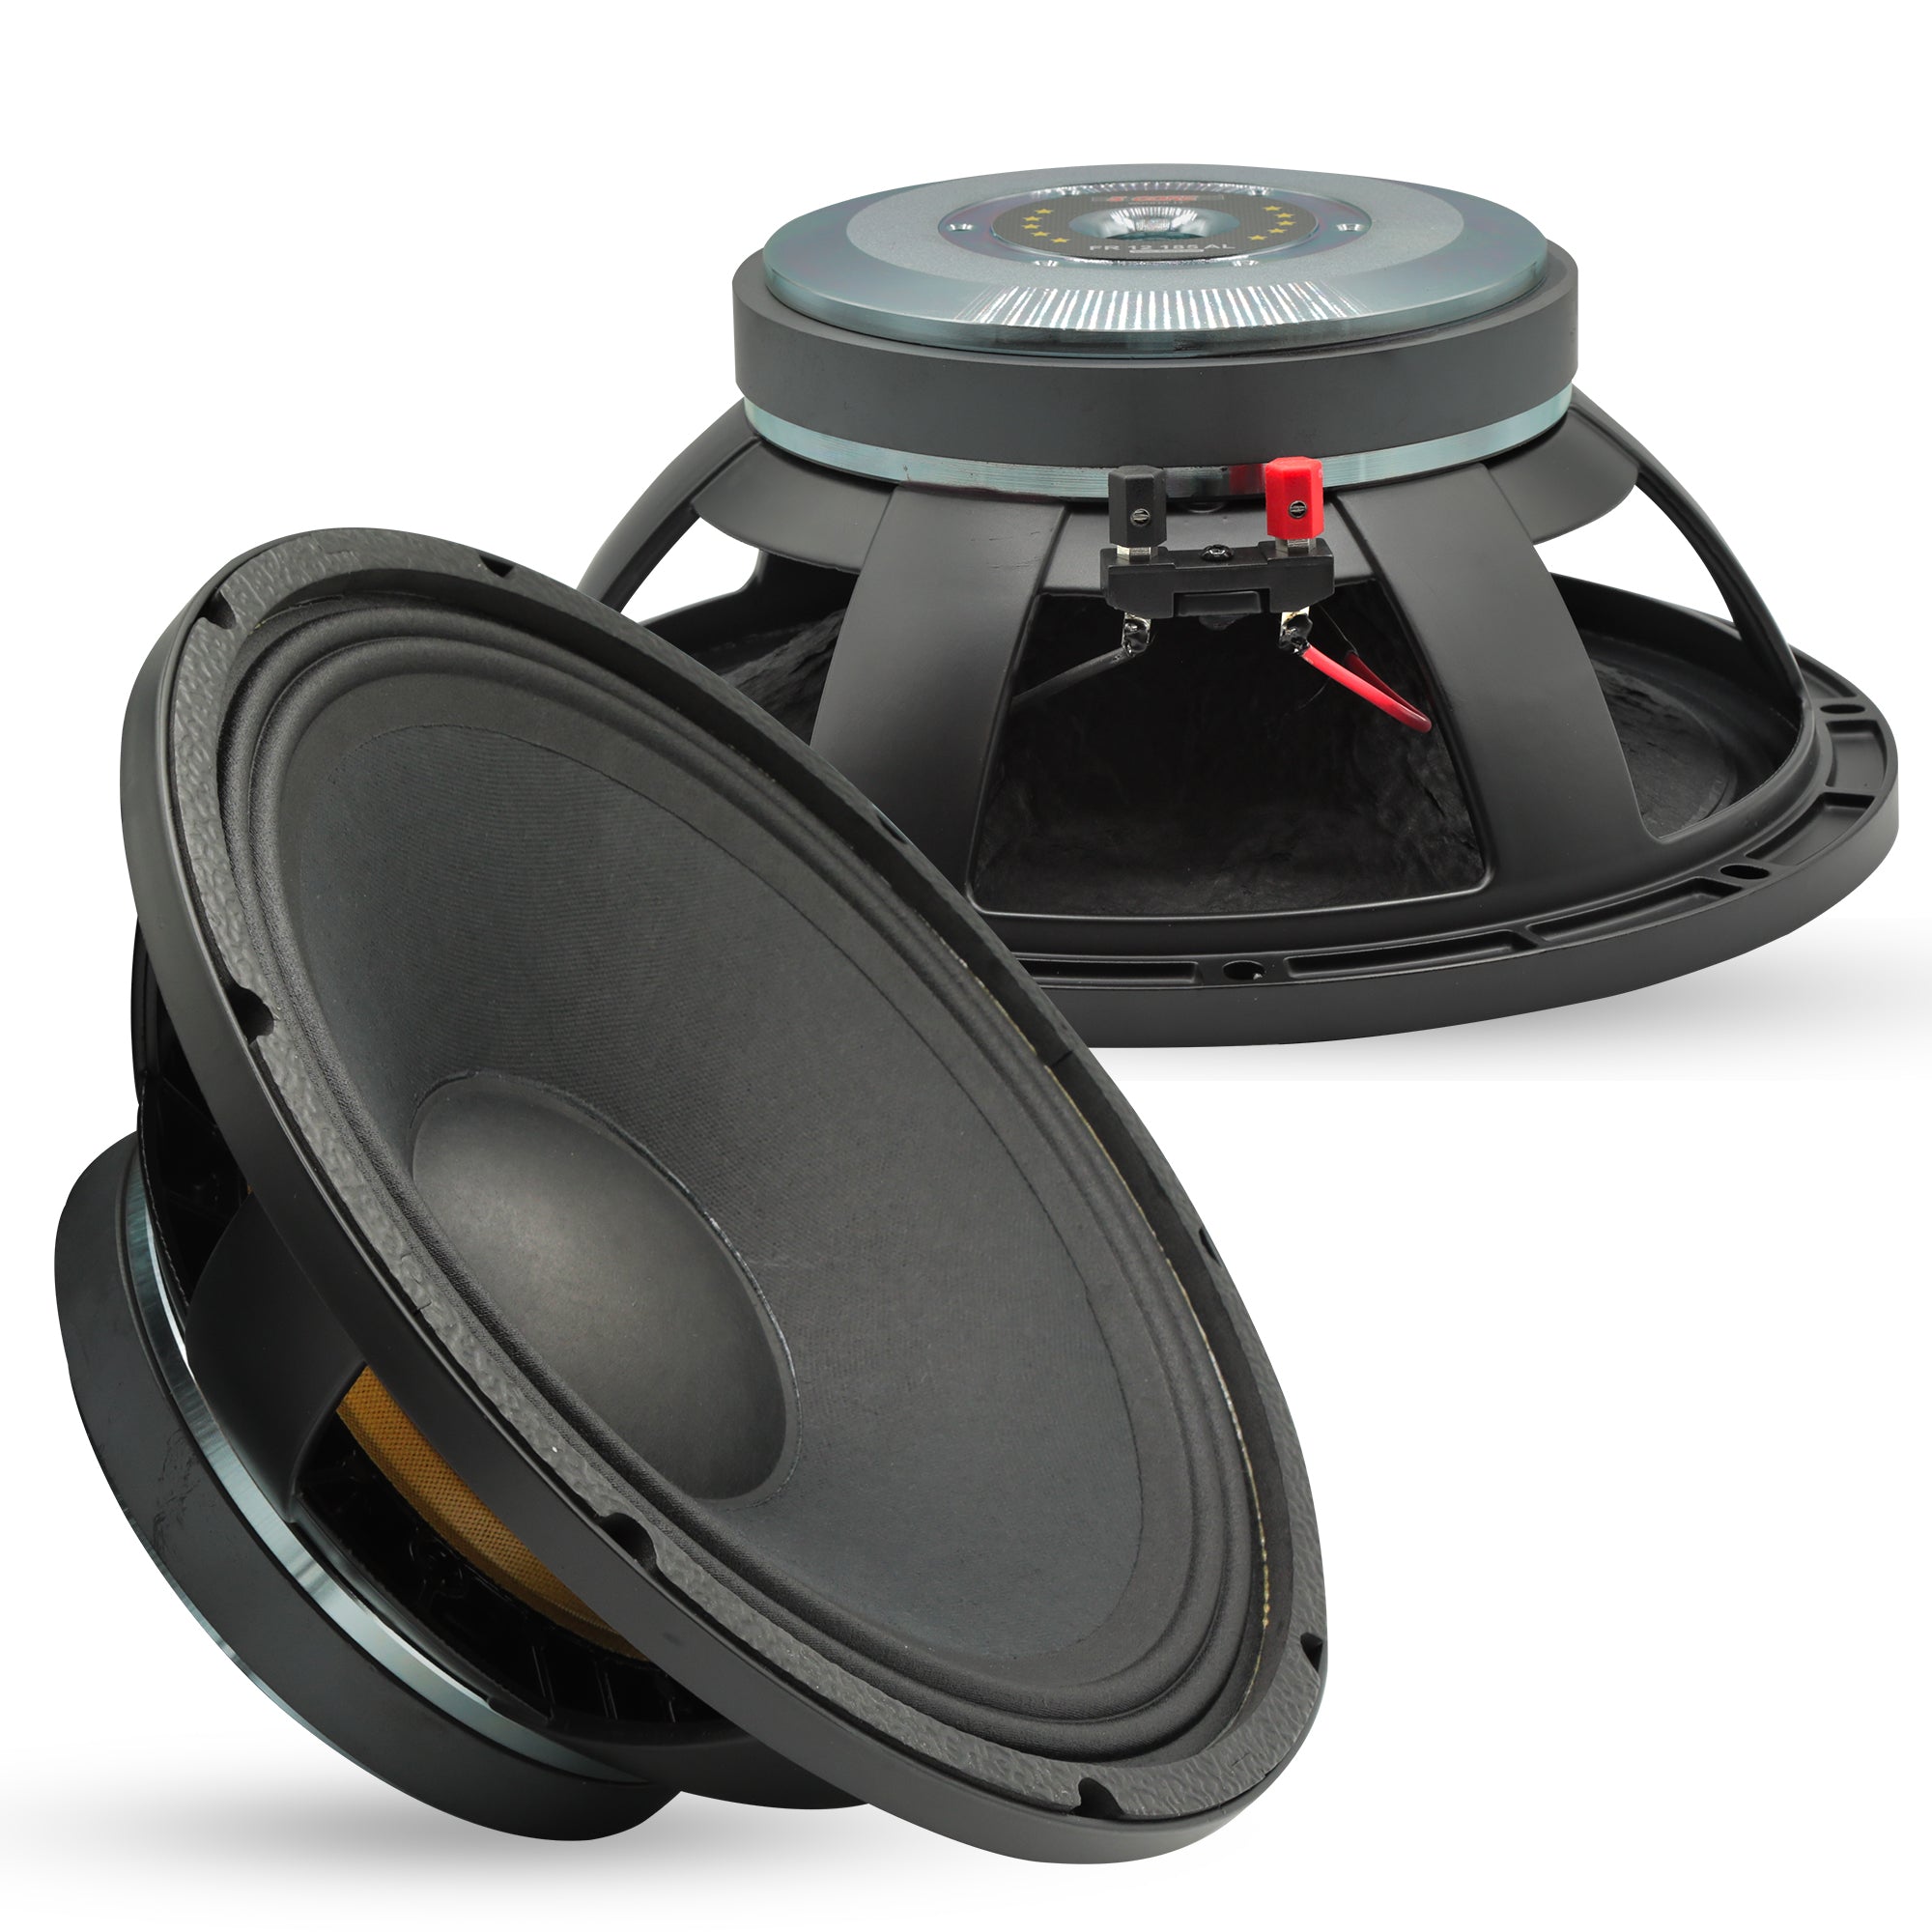 12-inch subwoofer speaker designed for DJ setups and bass enthusiasts